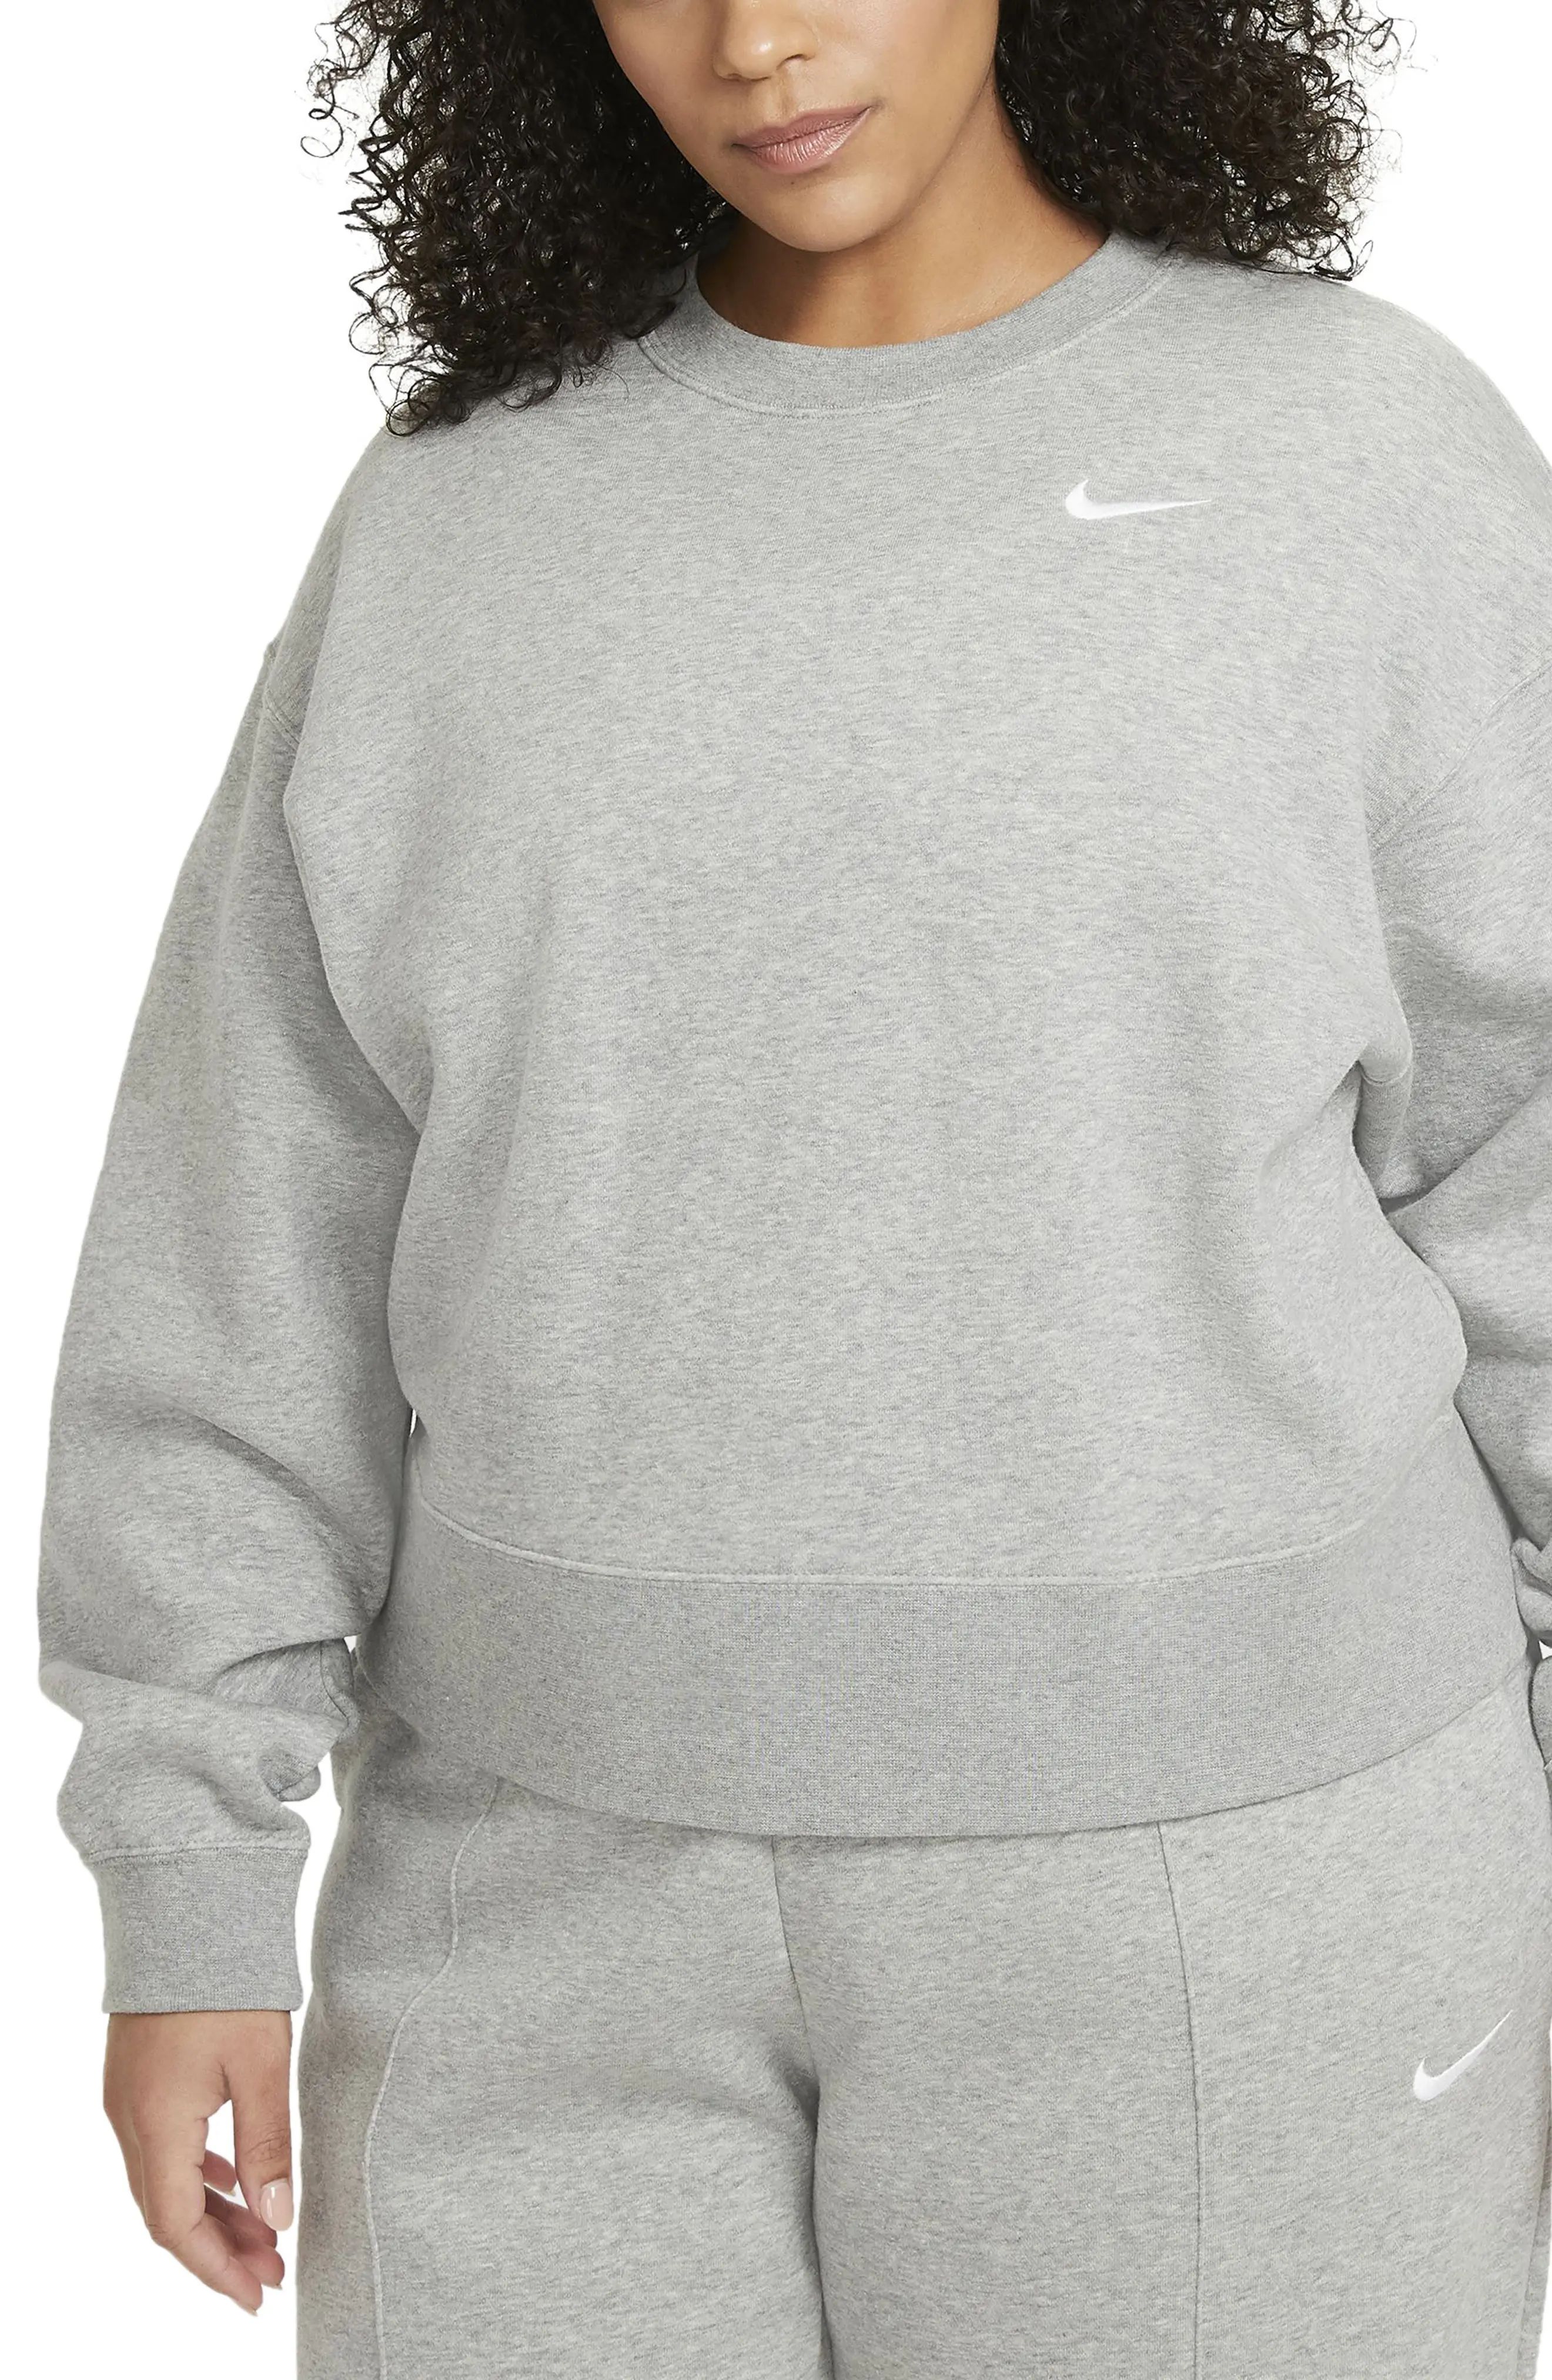 Nike Sportswear Fleece Crewneck Sweatshirt in Grey Heather/White at Nordstrom, Size 1X | Nordstrom